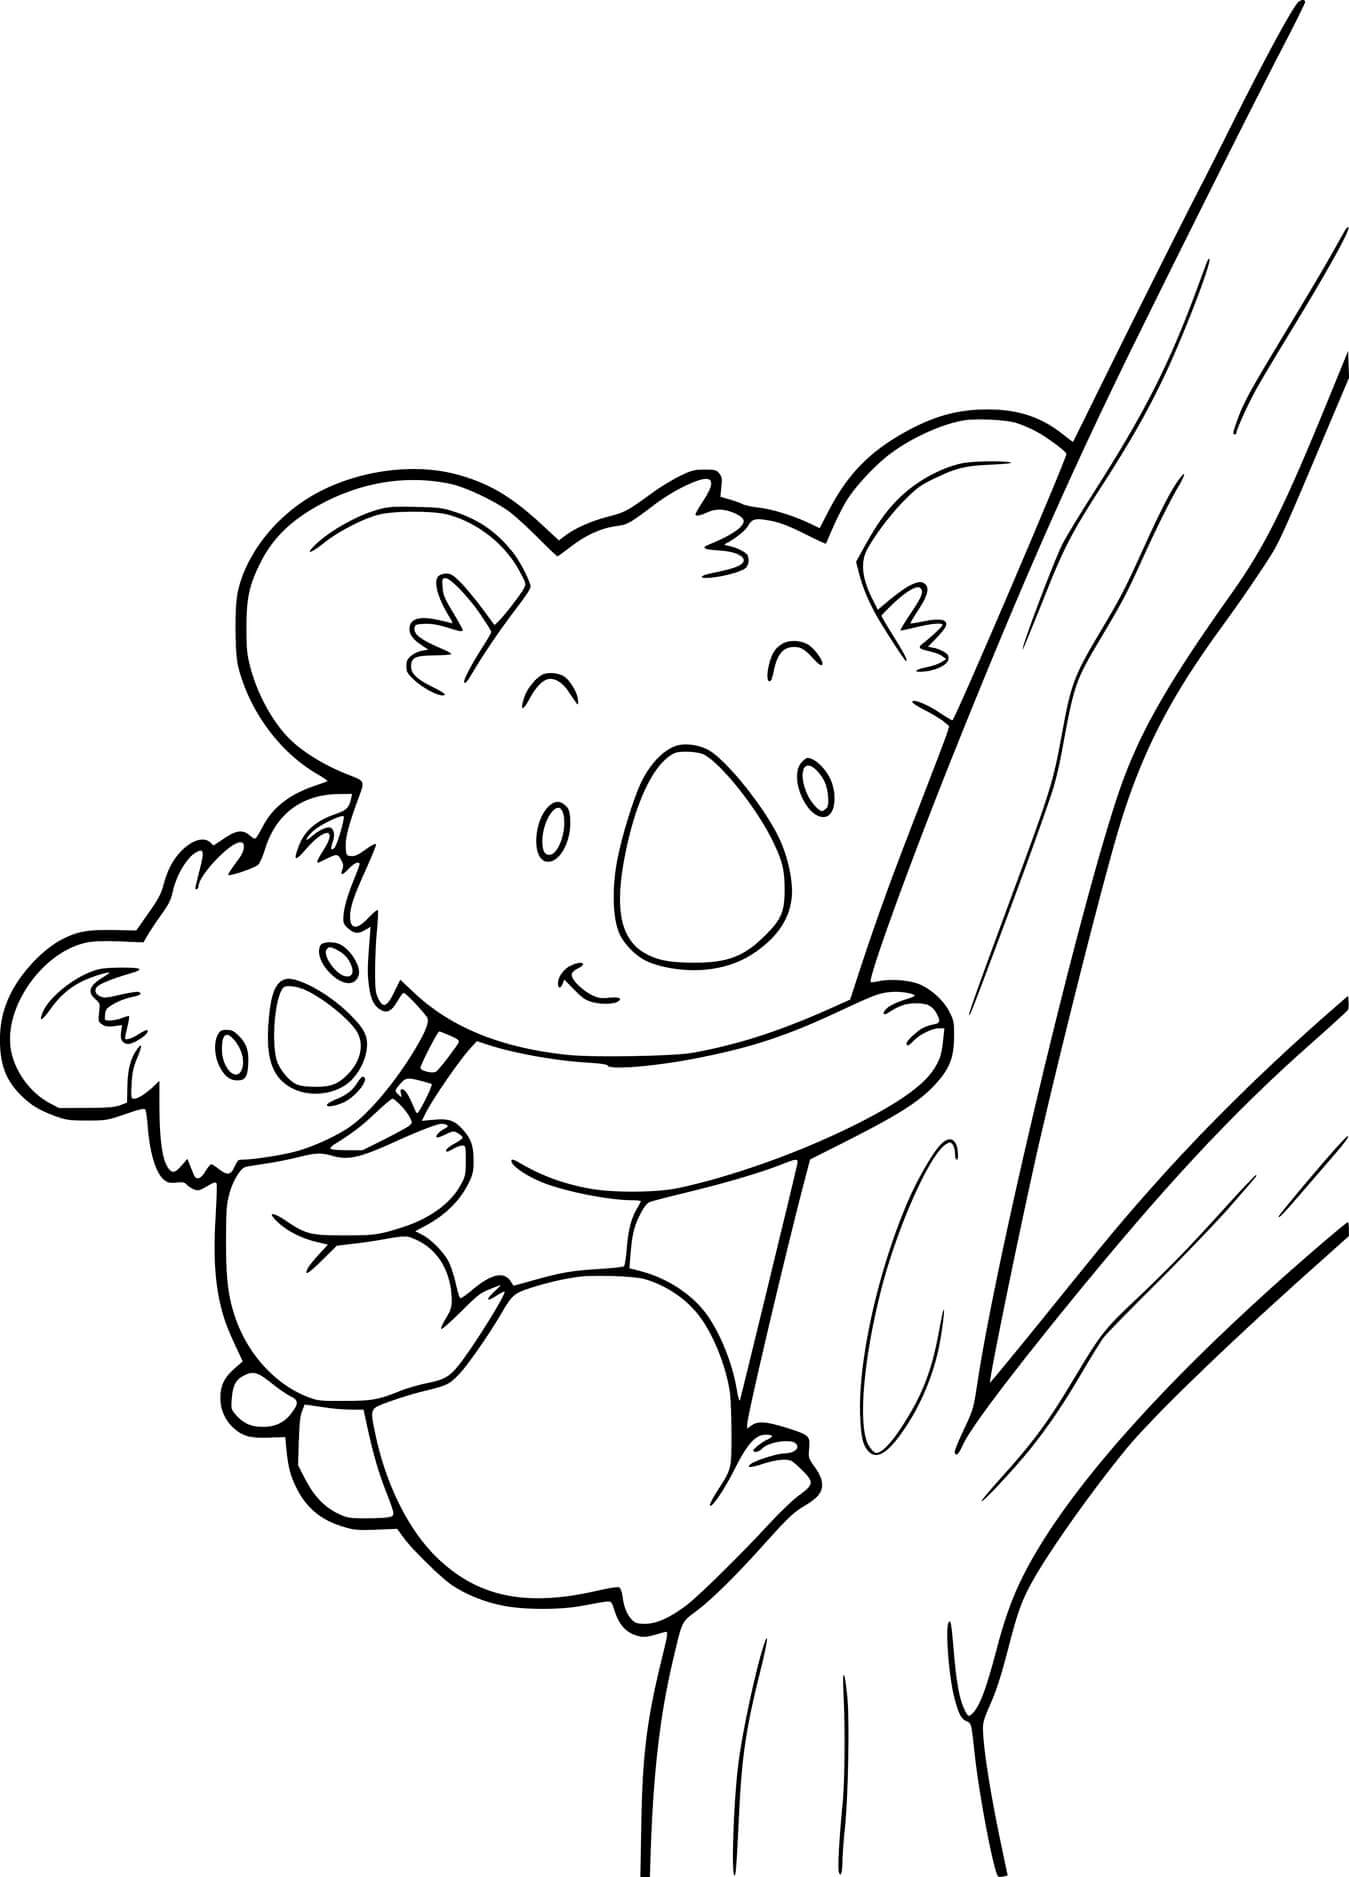 Koala Carrying Her Baby Climbing The Tree